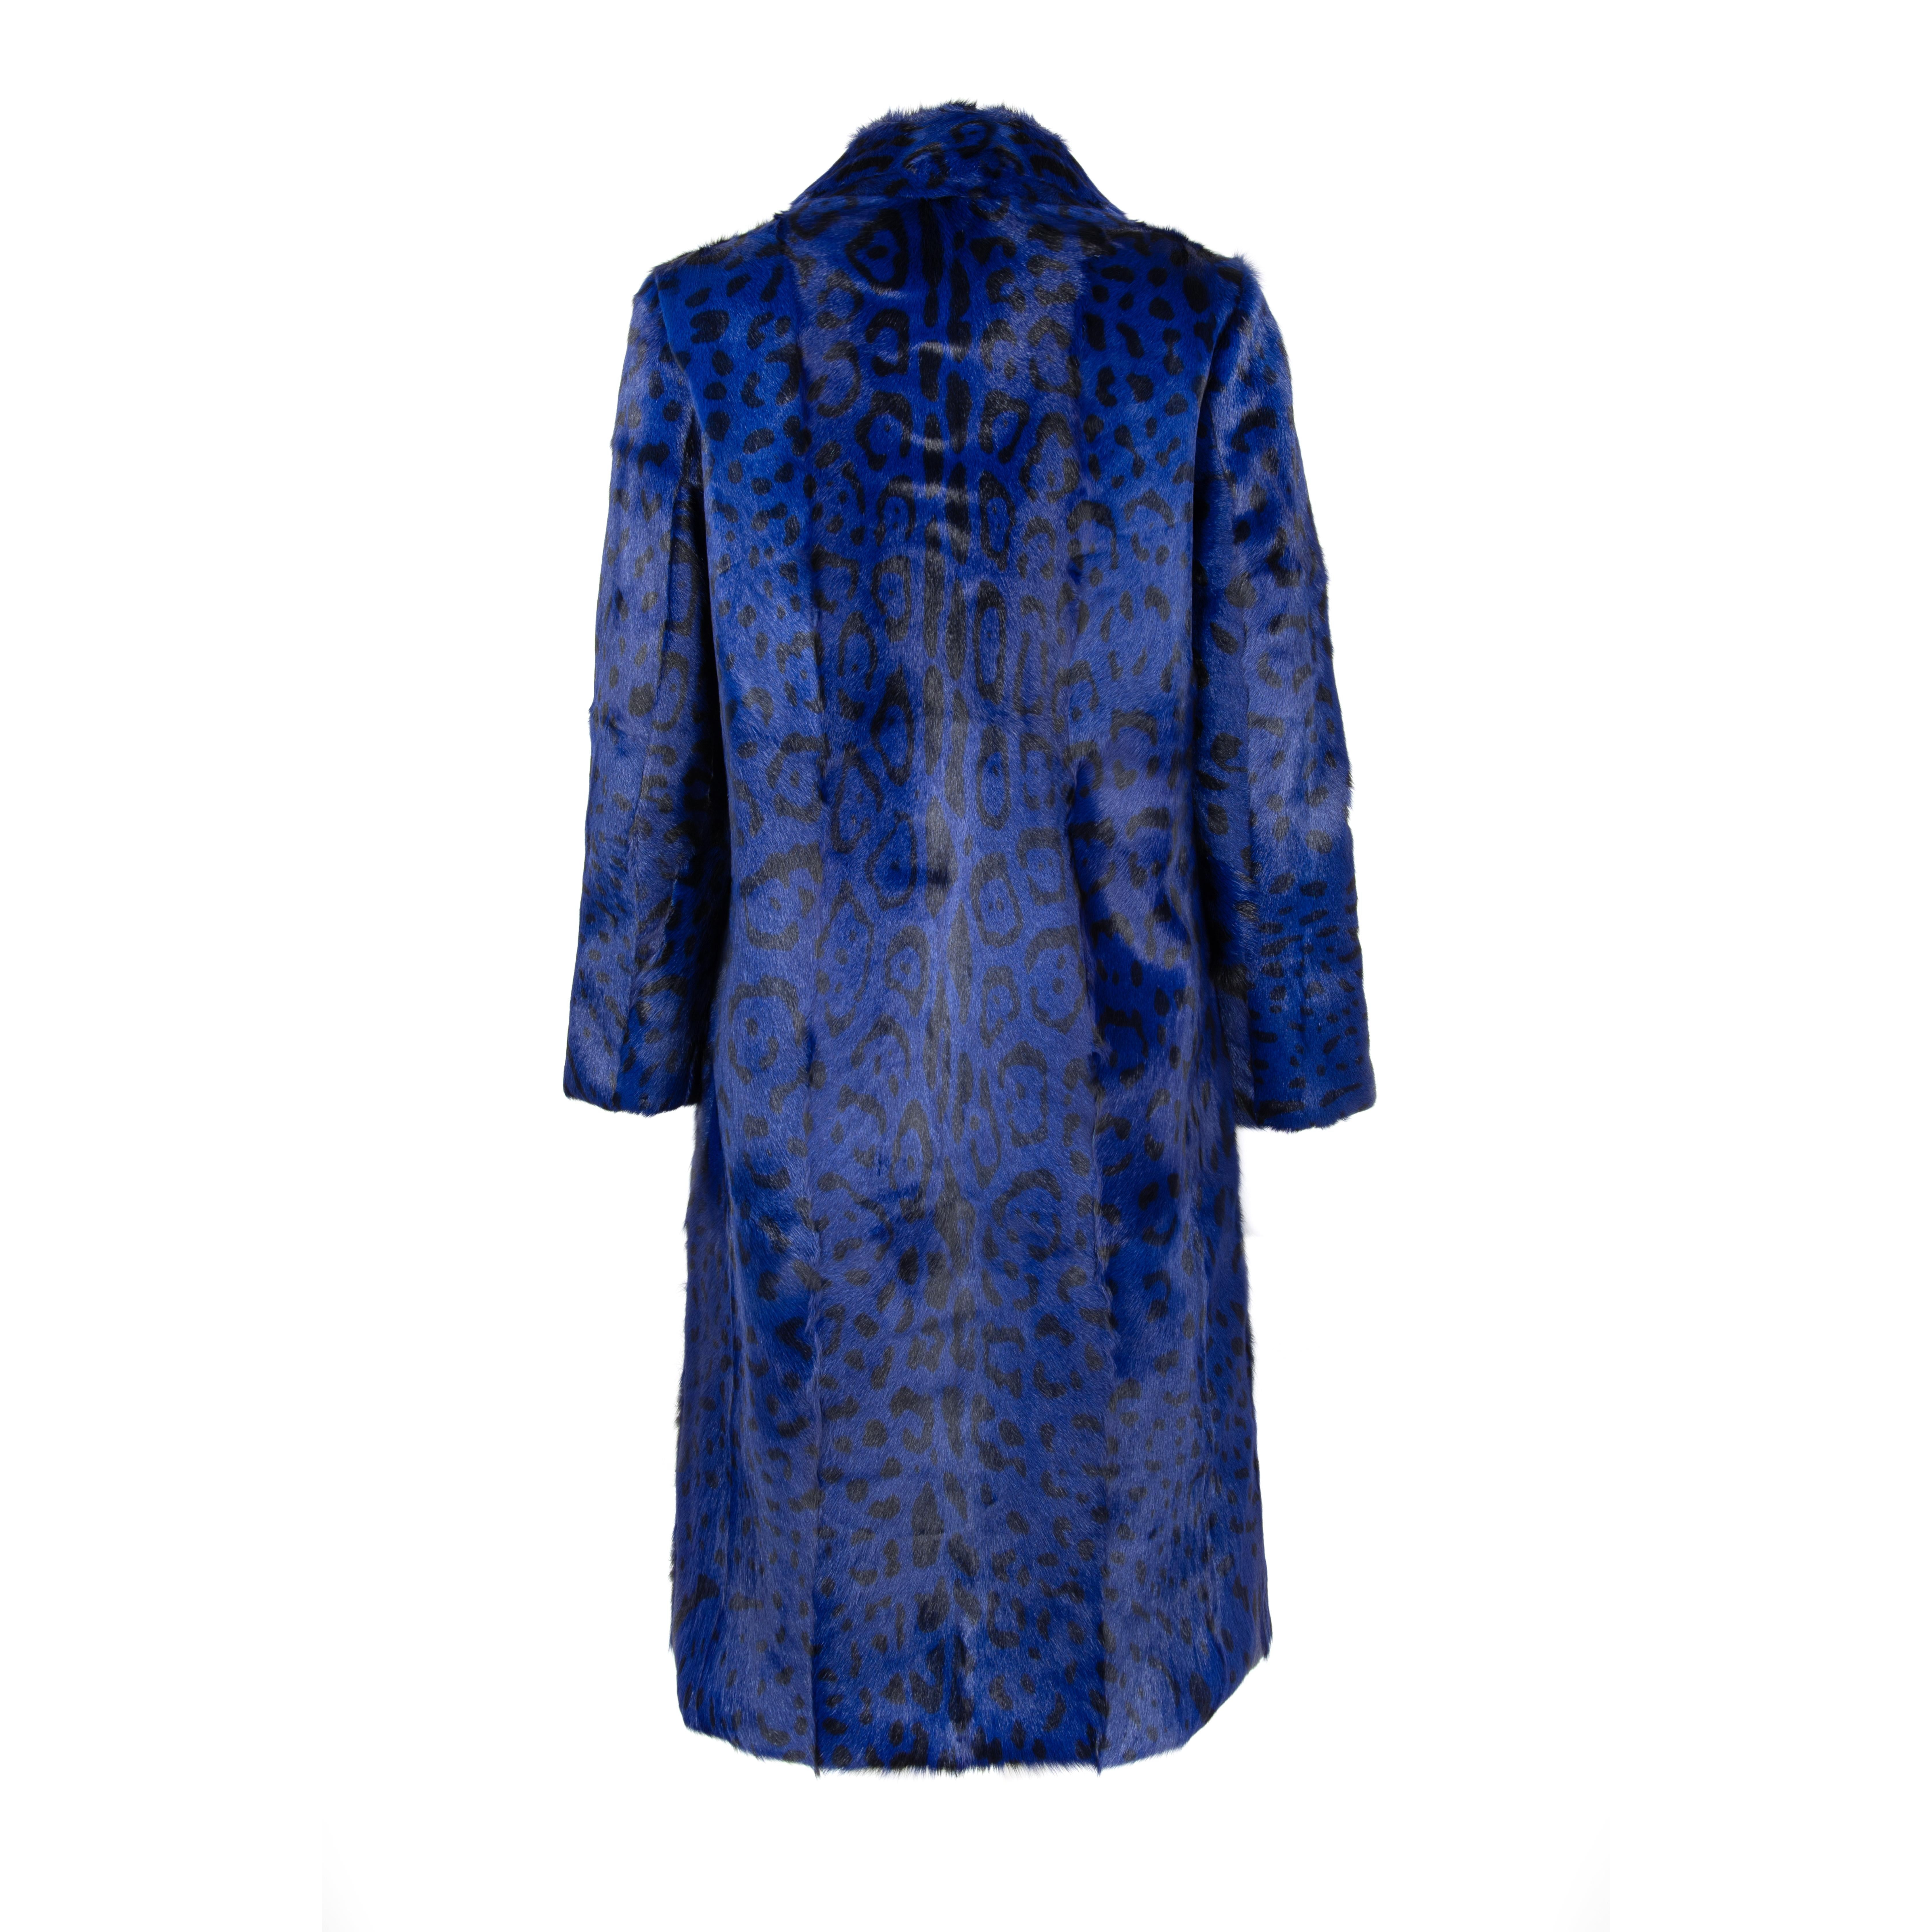 Women's Verheyen London Ink Blue Leopard Print Coat in Goat Hair Fur UK 10 